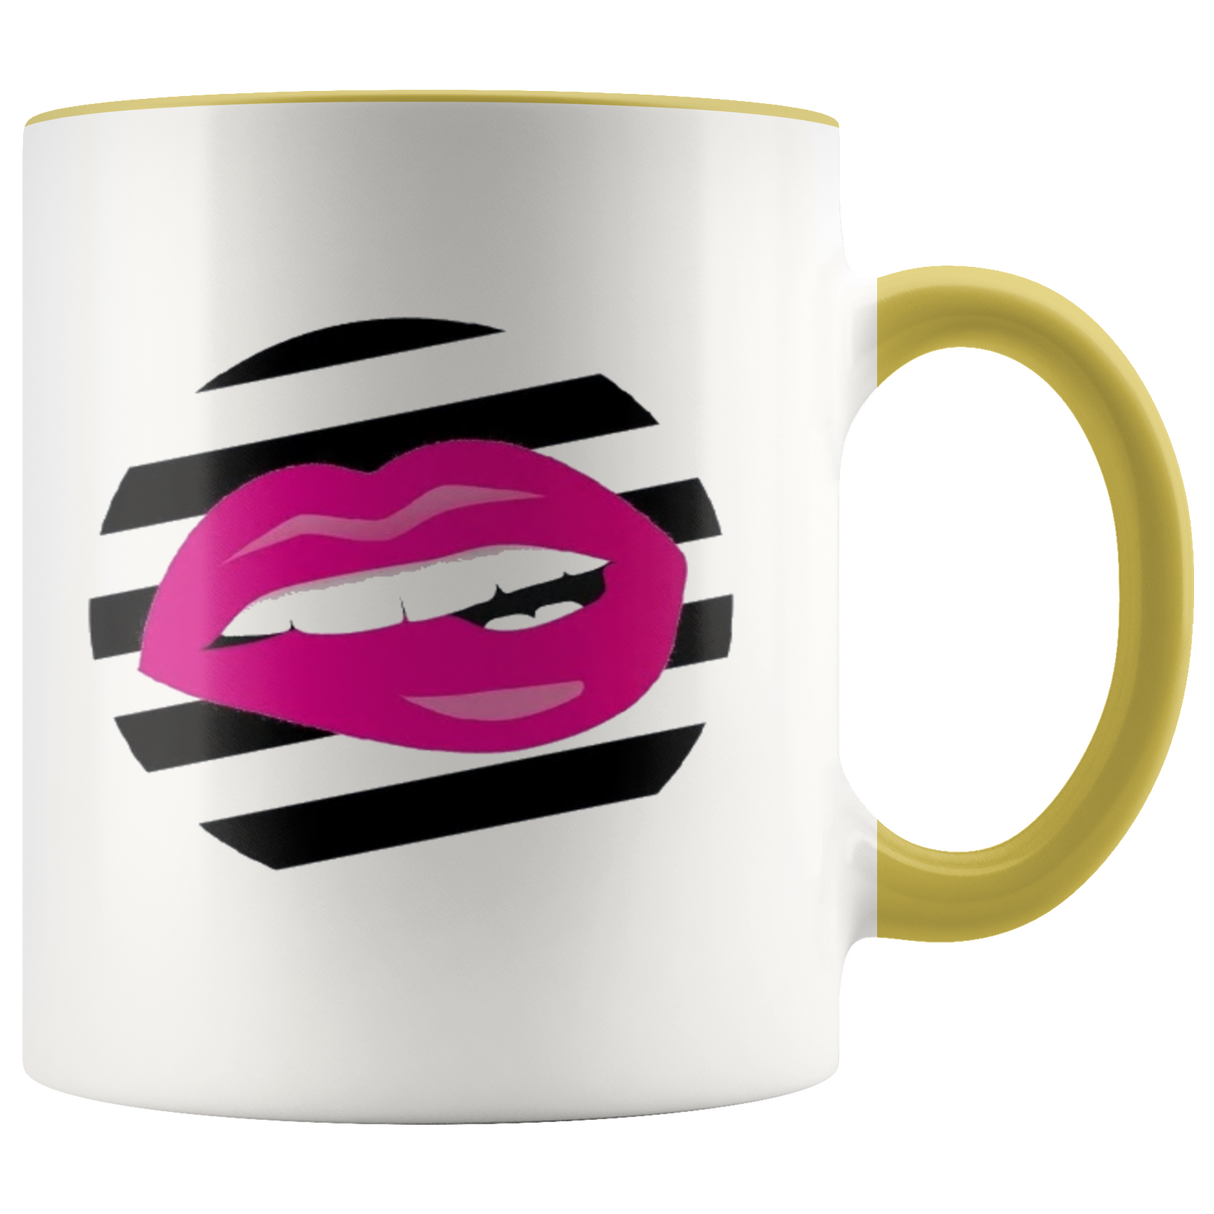 Striped Pink Lip Mug - Shop Sassy Chick 